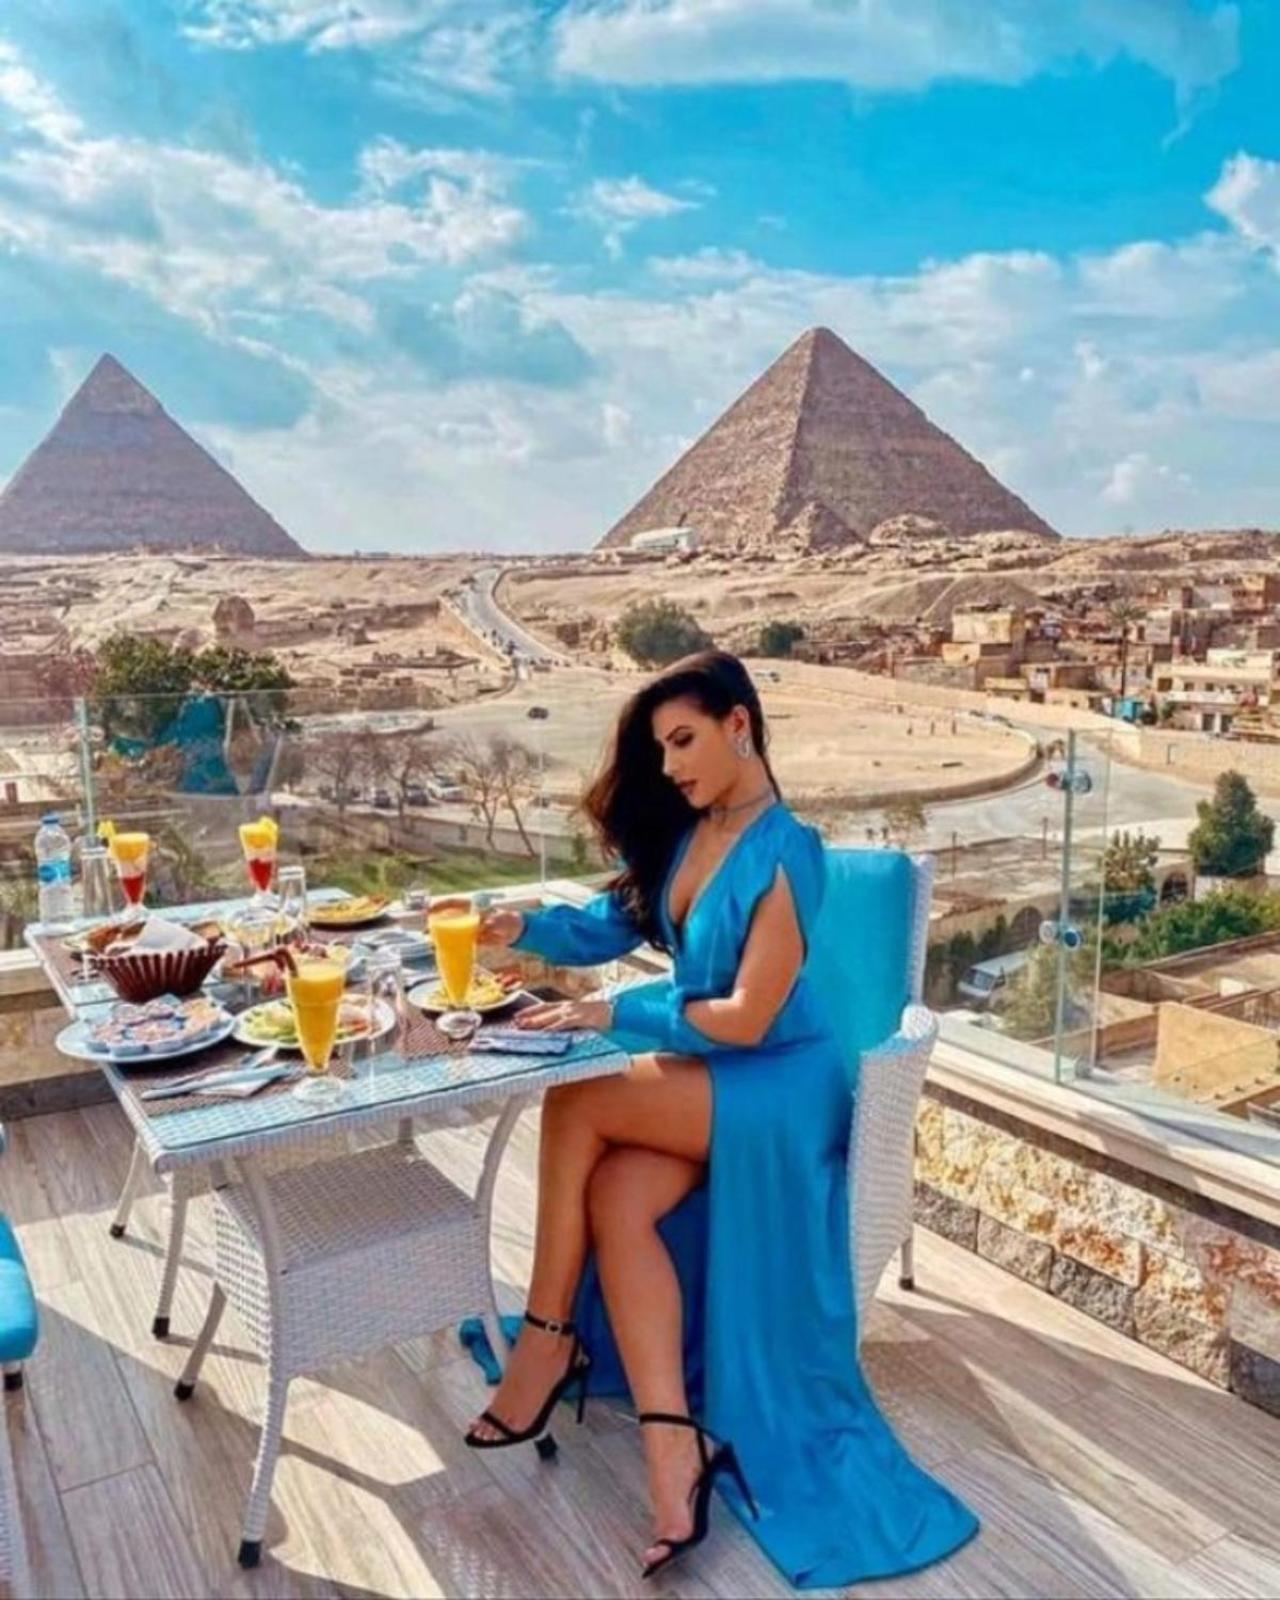 Great Pyramid Inn Cairo Exterior foto